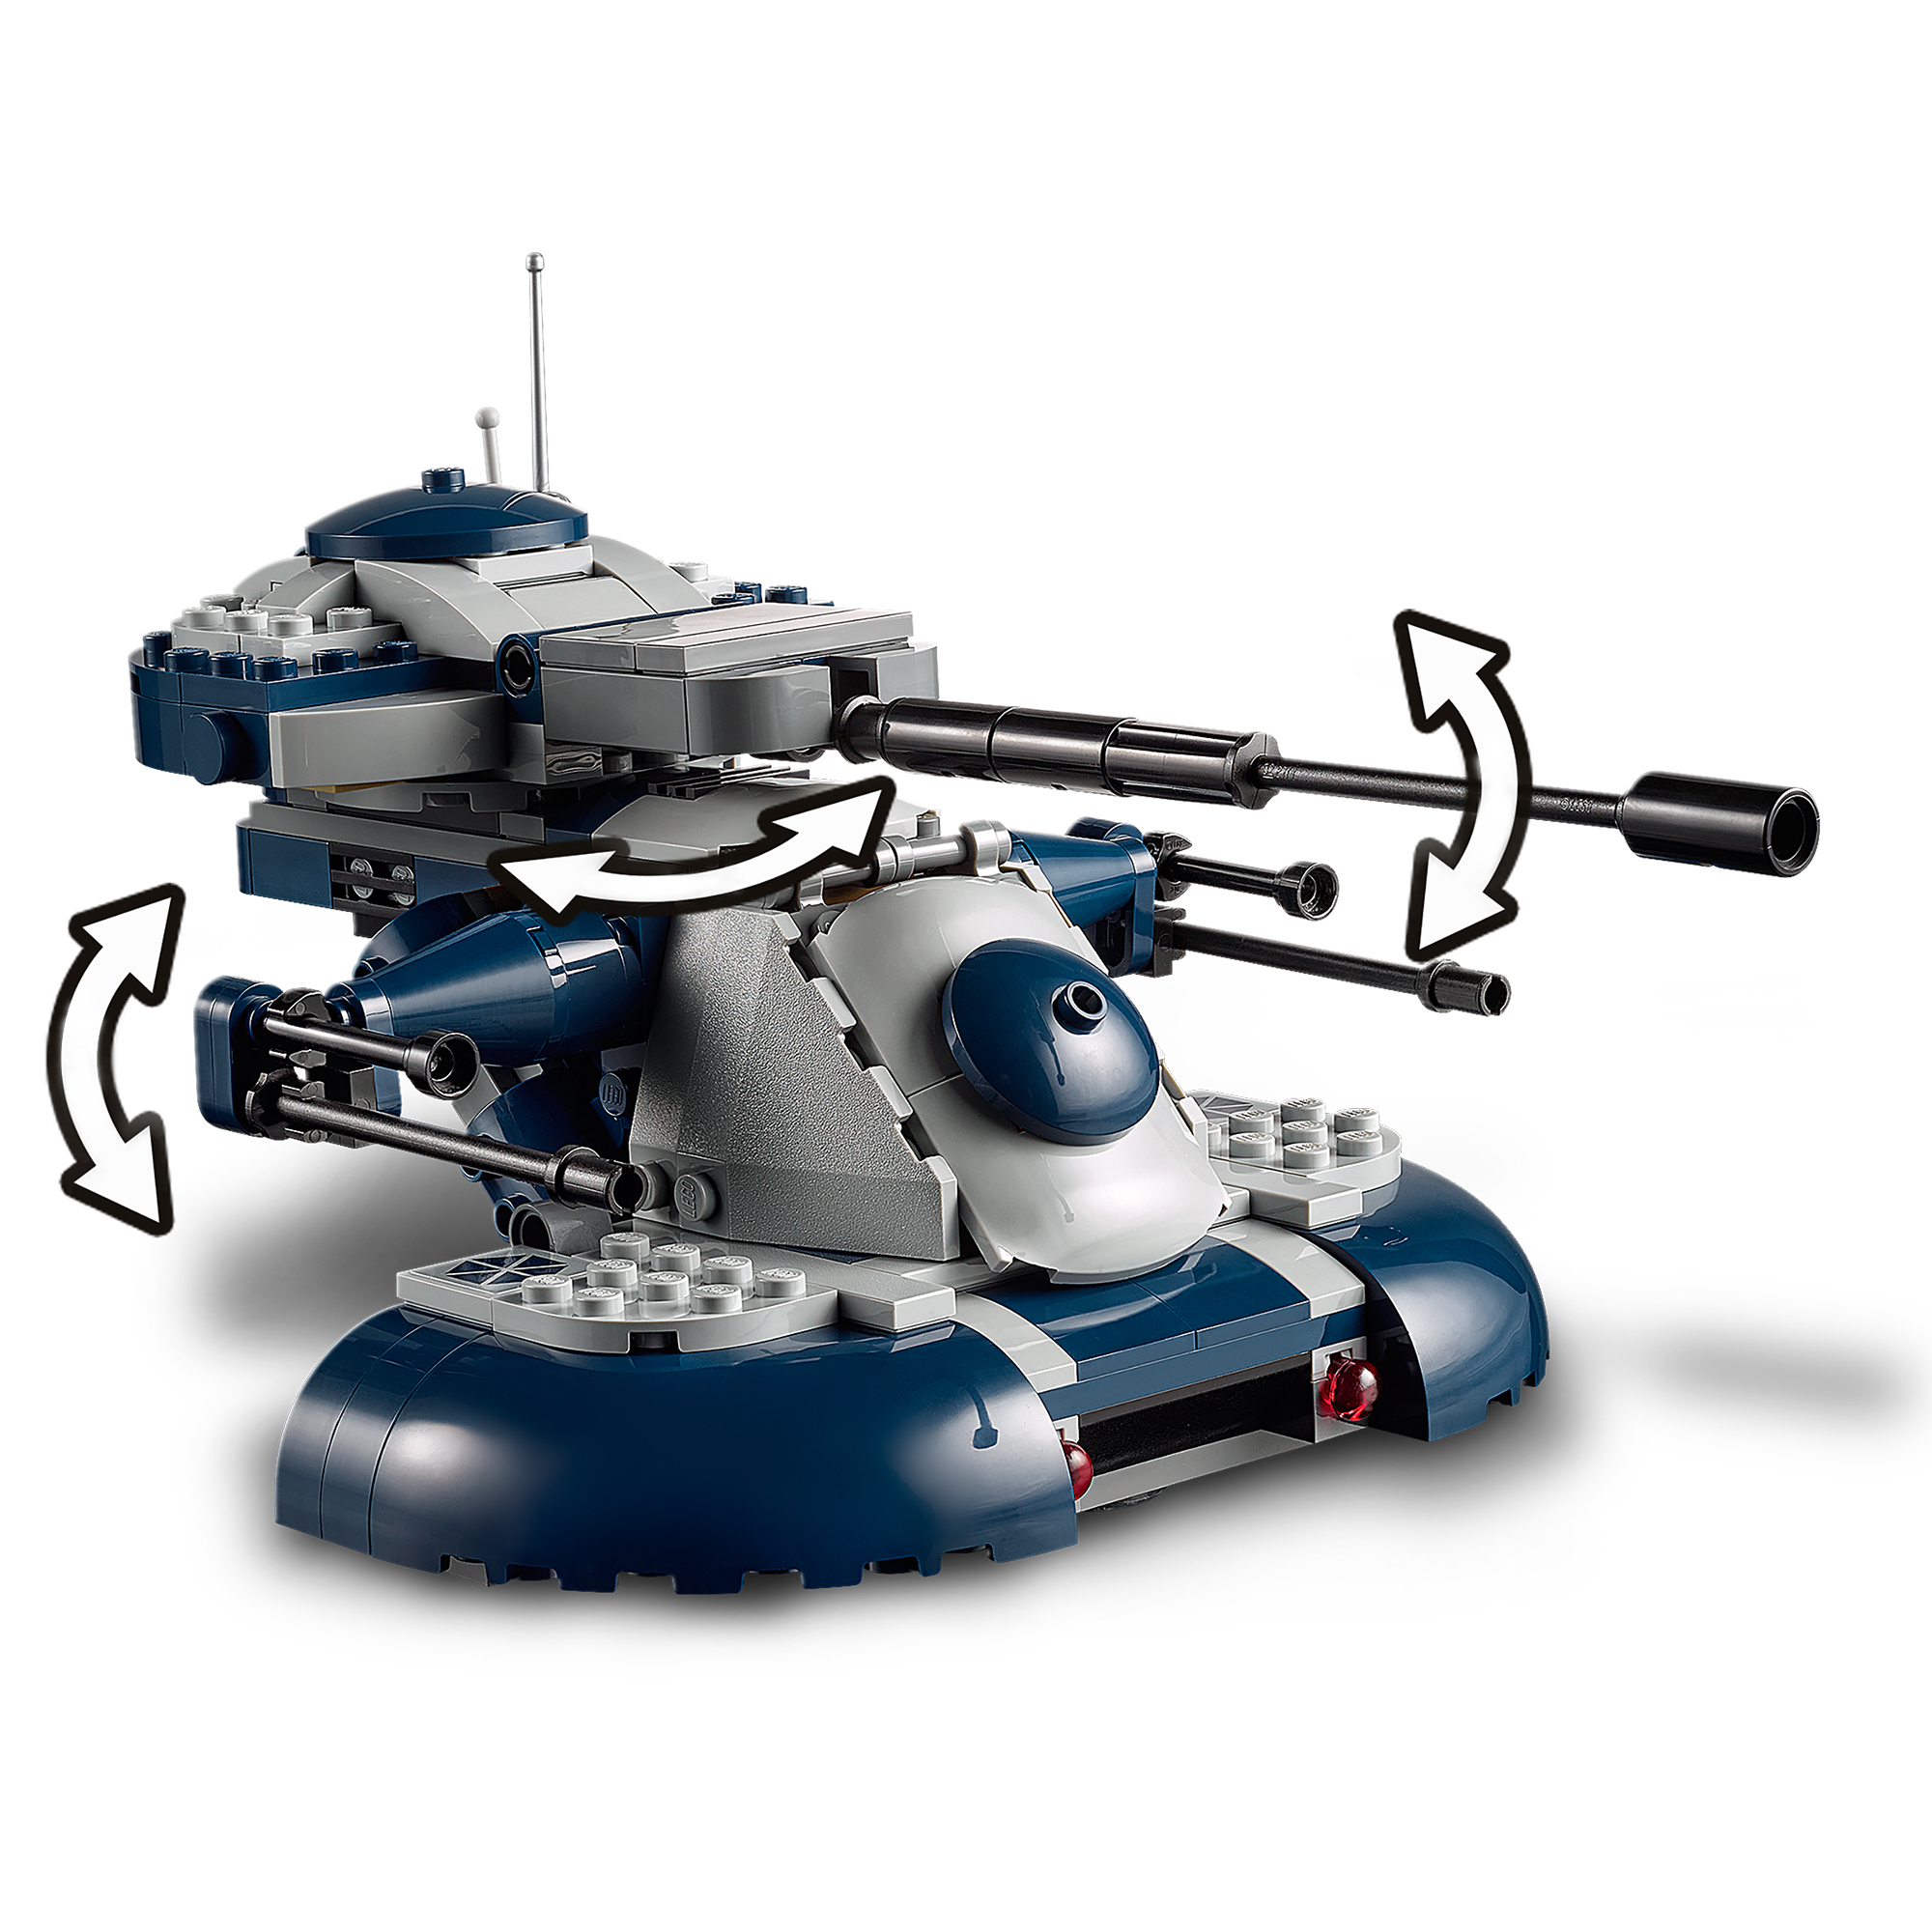 LEGO Star Wars Armored Assault Tank (AAT)